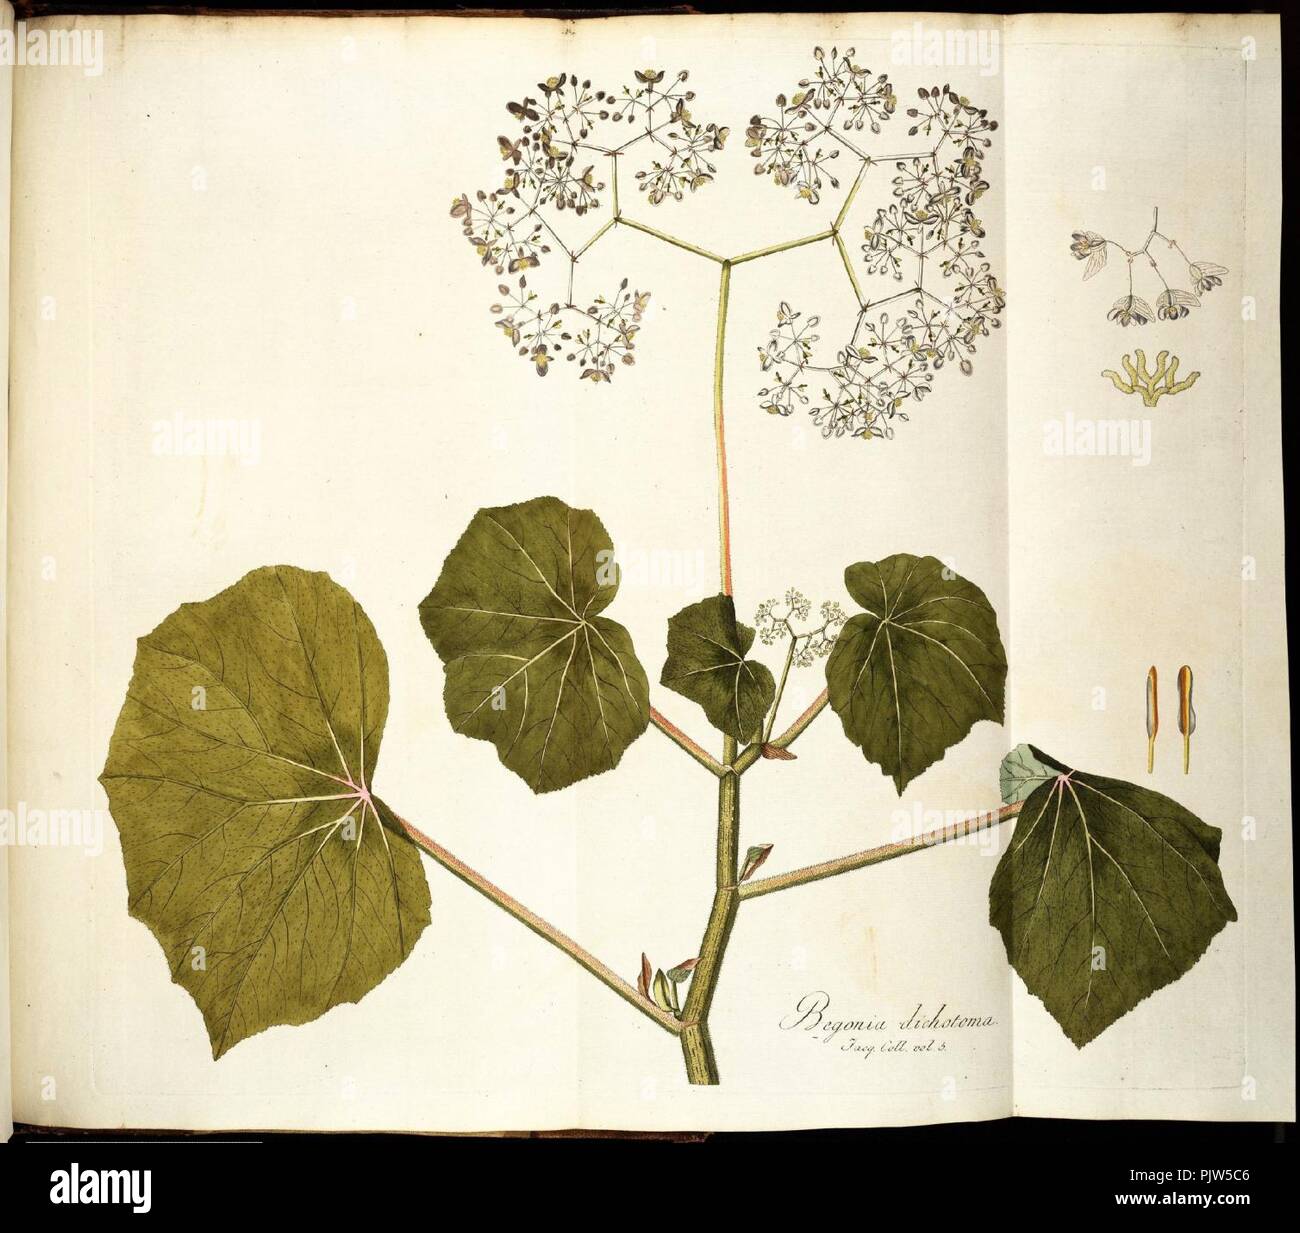 Begonia dichotoma. Stock Photo